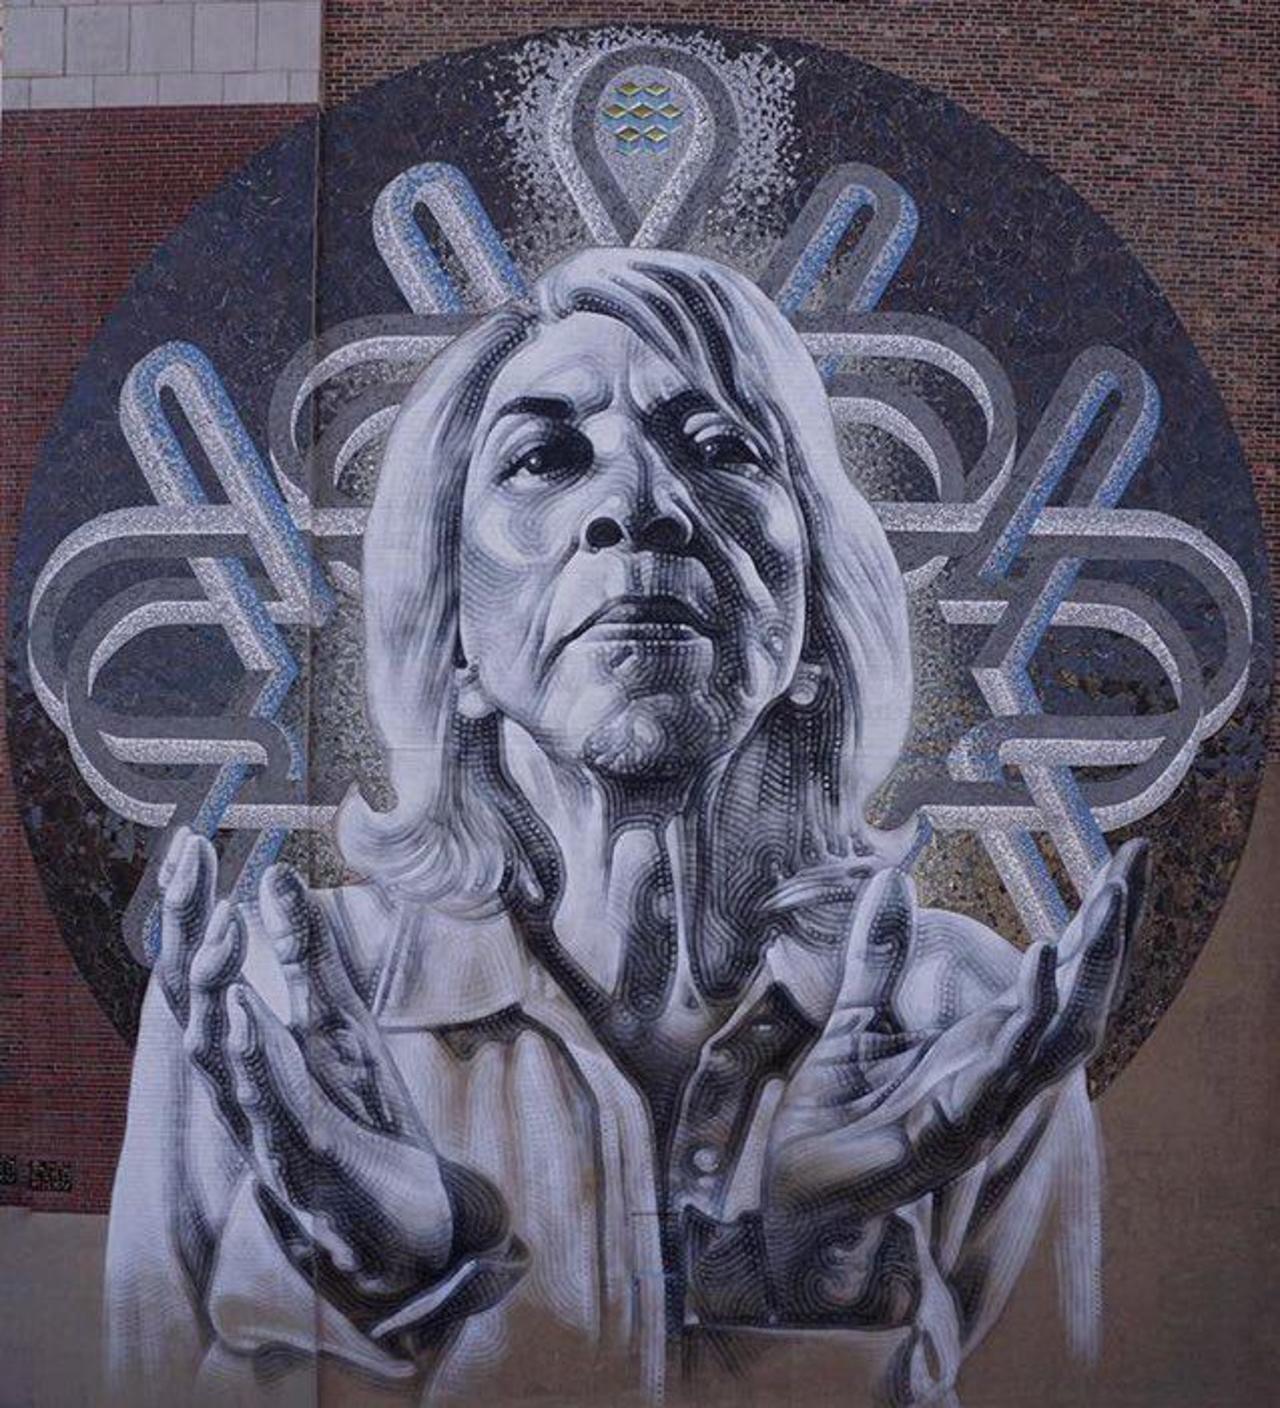 New Street Art by El Mac 

#art #graffiti #mural #streetart https://t.co/n8V93vRsos